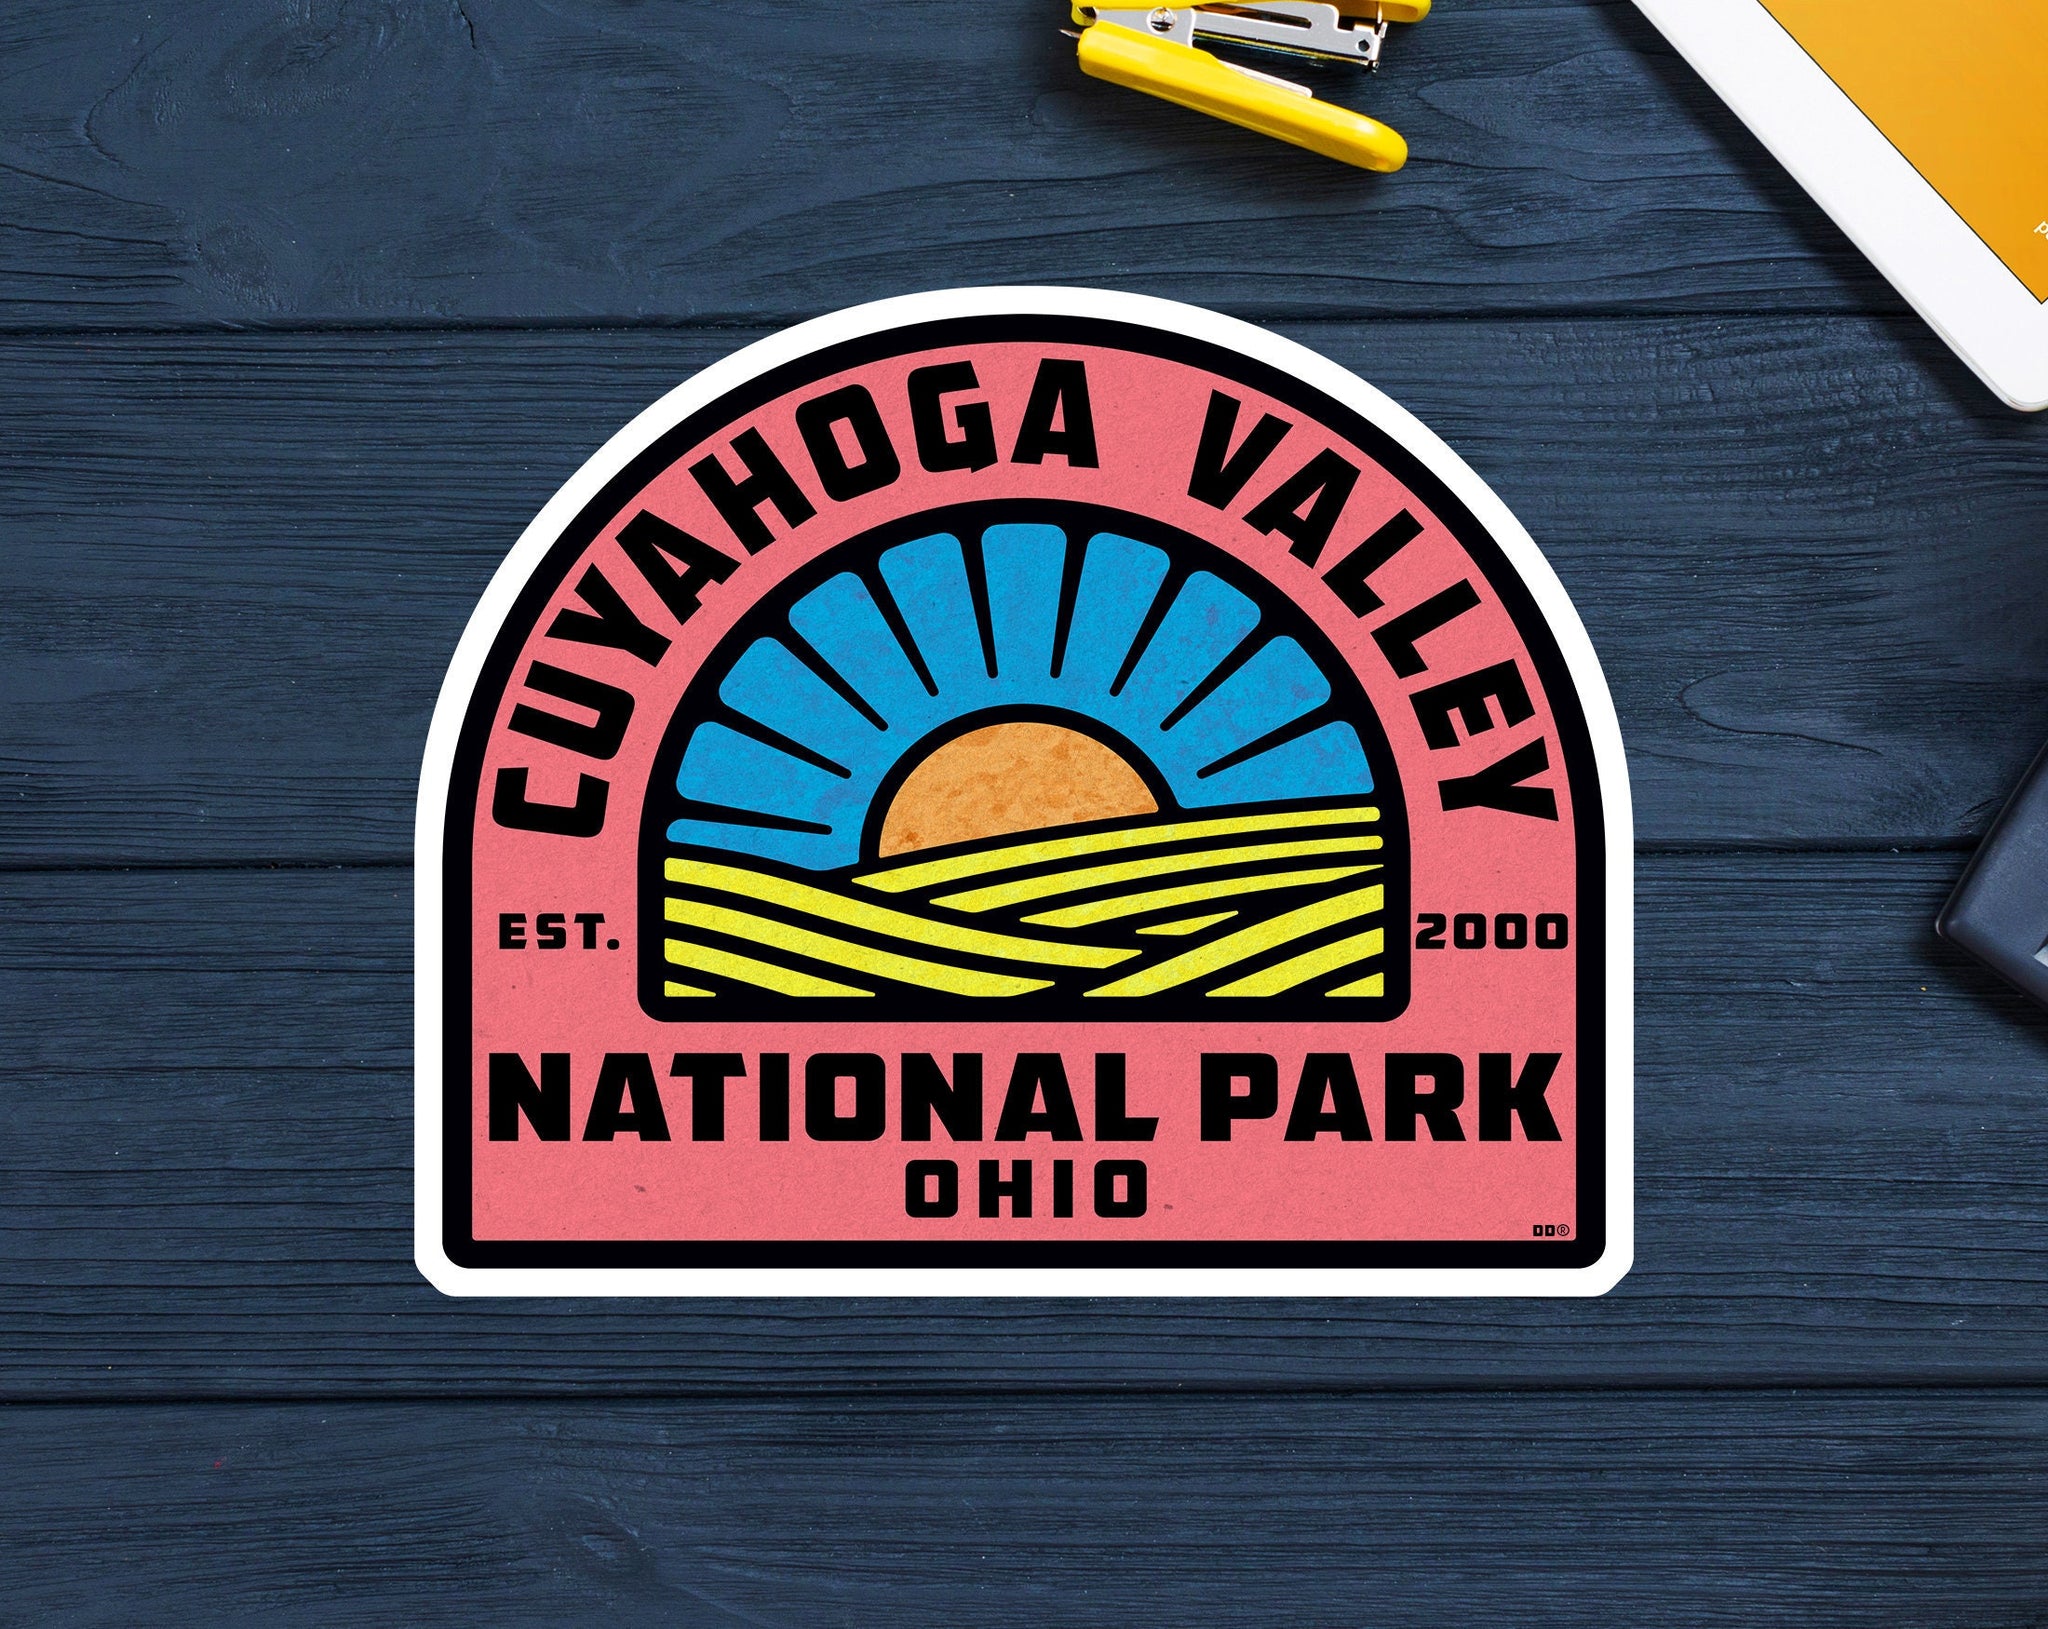 Cuyahoga Valley National Park Ohio Sticker Travel Decal 3 3/8" x 3 1/8" Vinyl Laptop